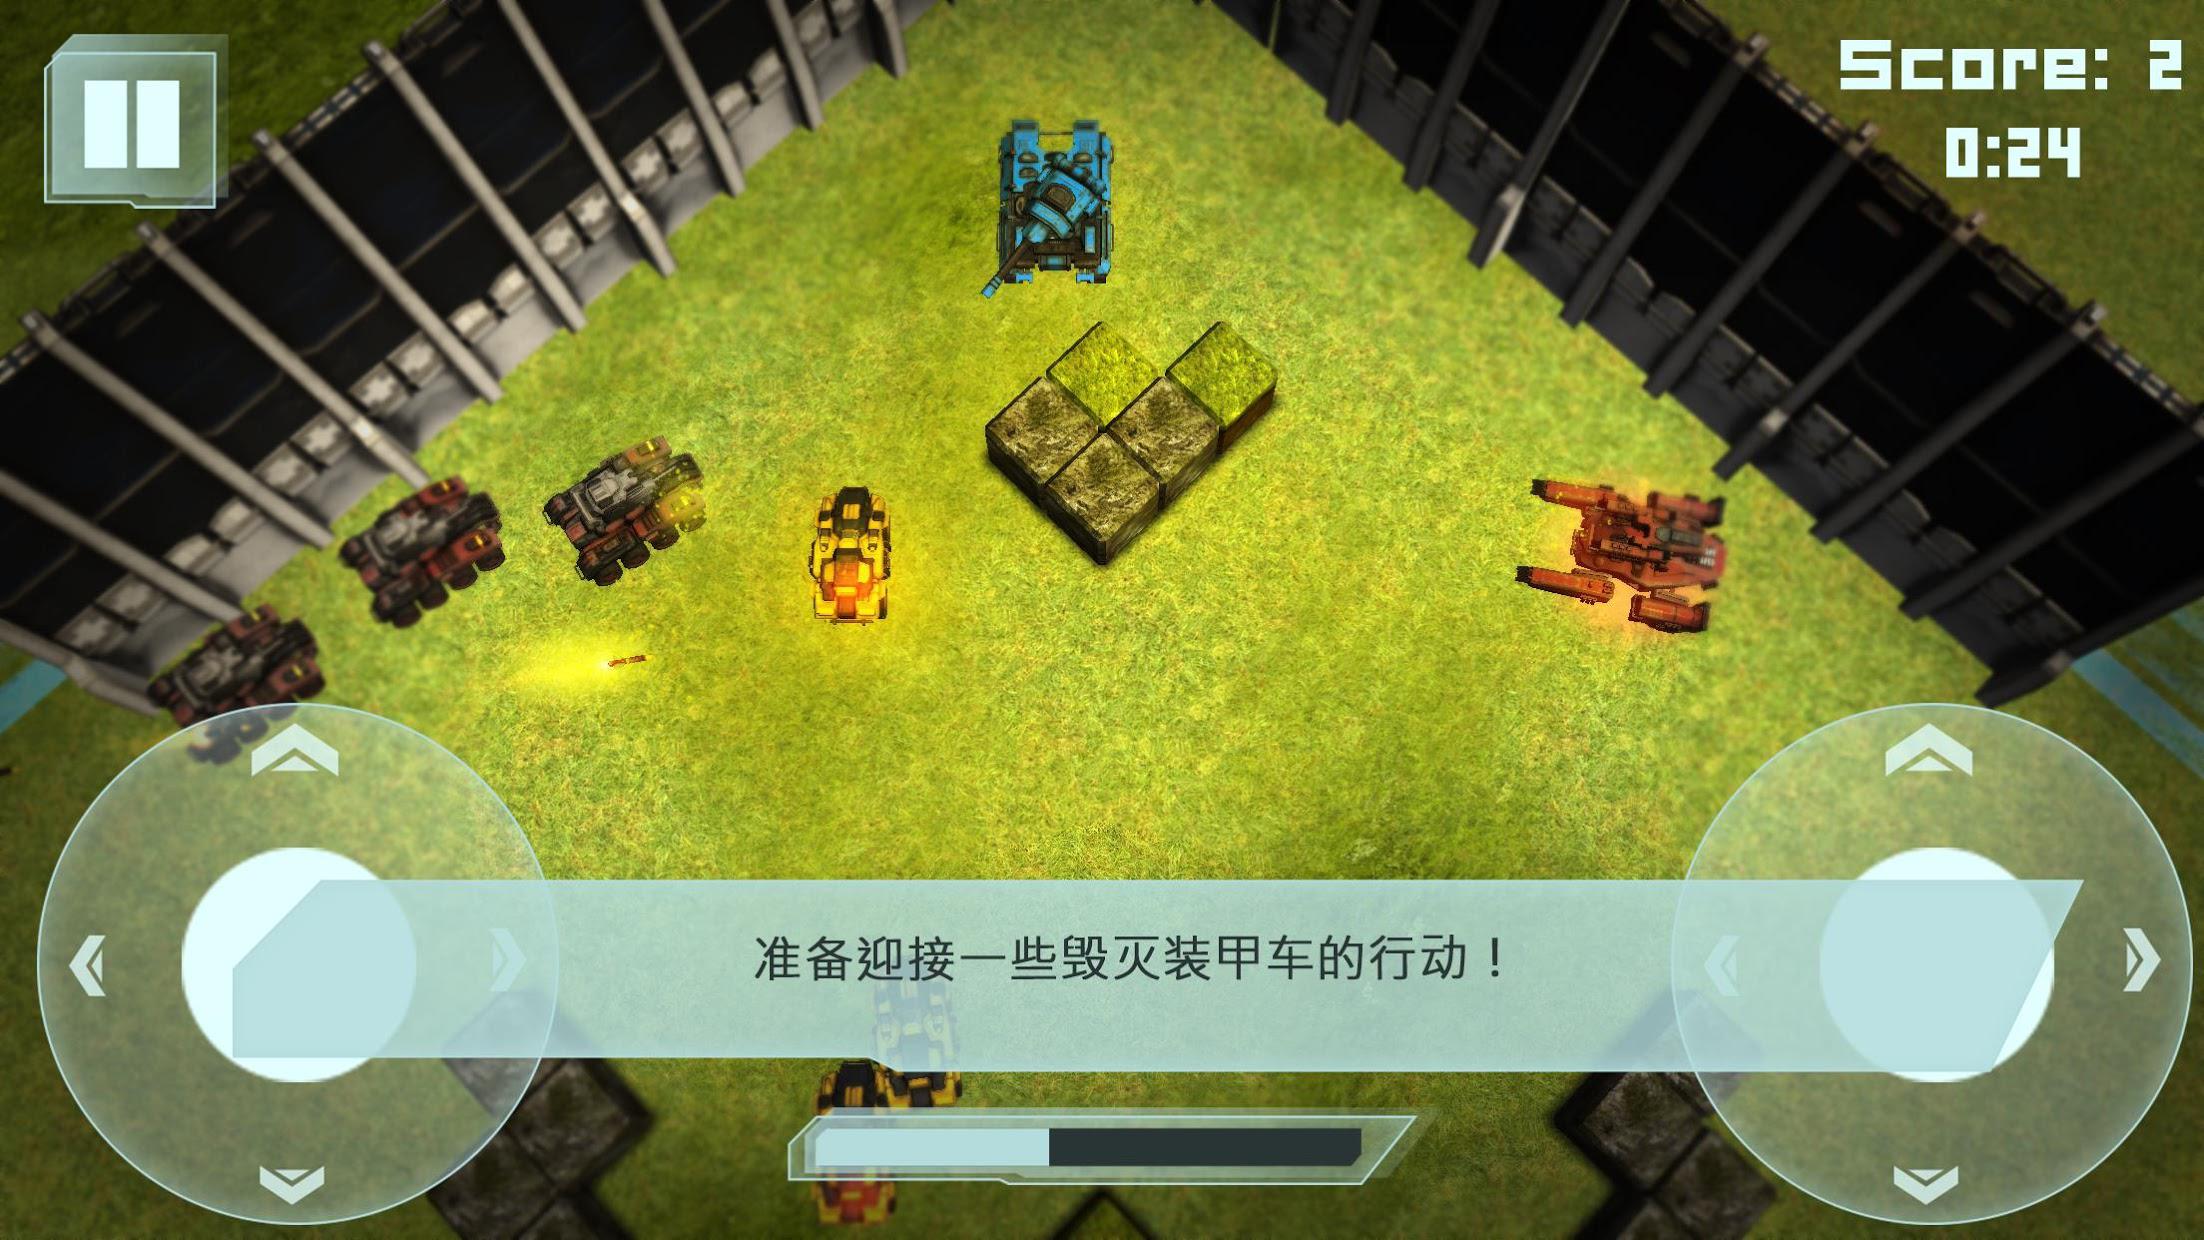 3D 坦克： 射击 - 快速战斗游戏_游戏简介_图3